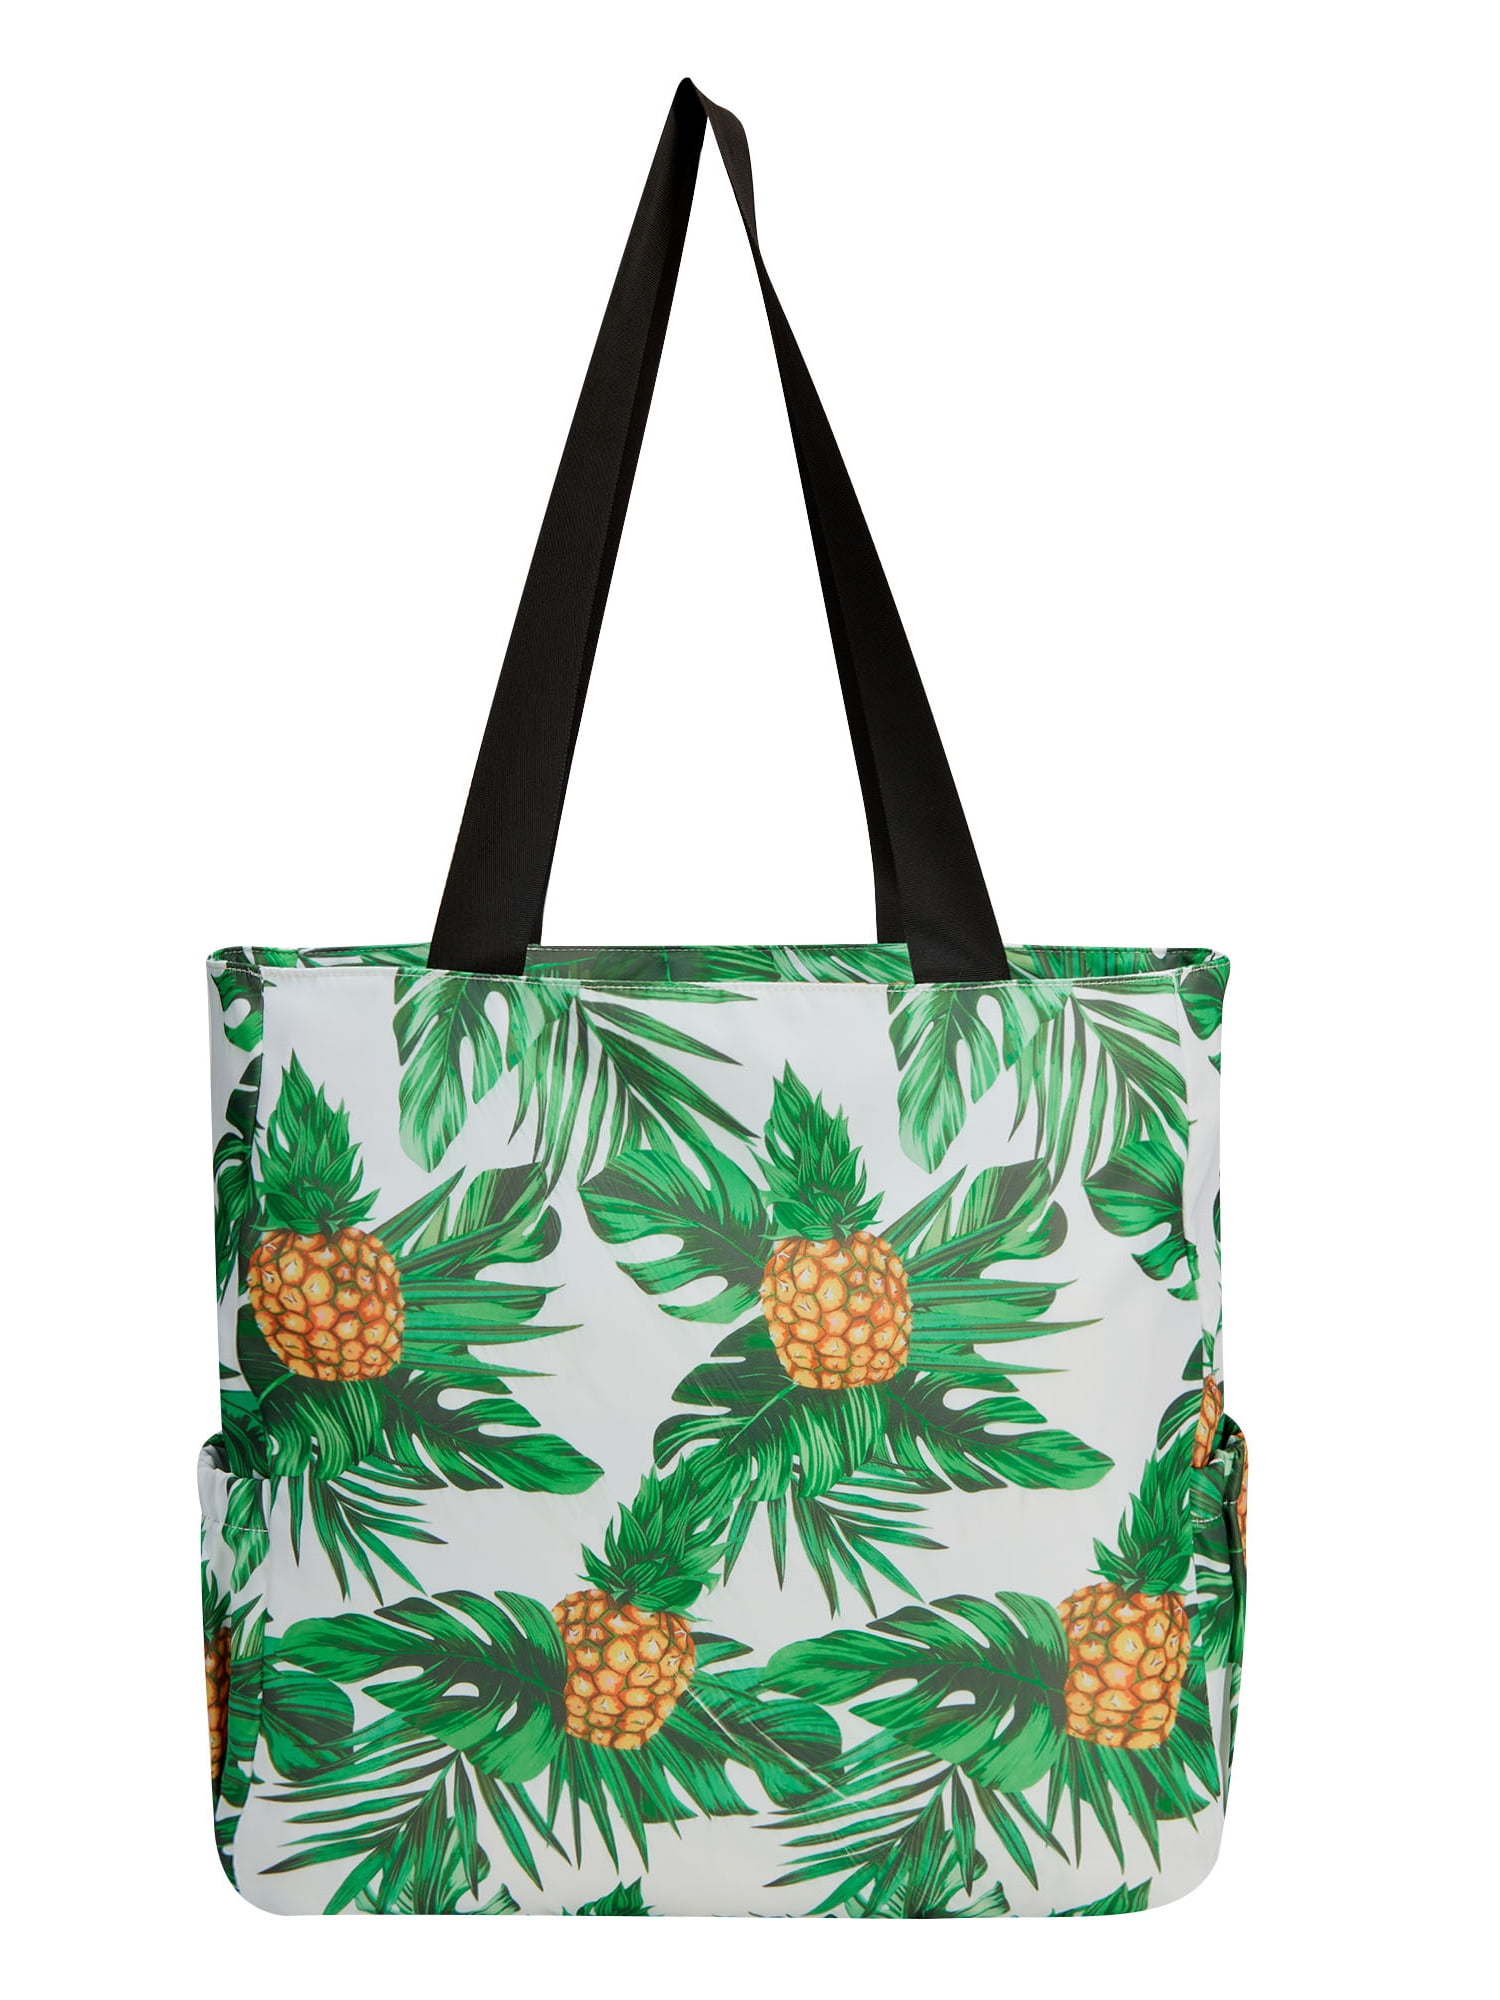 LELINTA Tote Bag With Zipper Waterproof Sandproof Women Beach Bag Handbag  Gym Bag Travel Shopping Bag Large Floral Print Tote Bag With Strap 